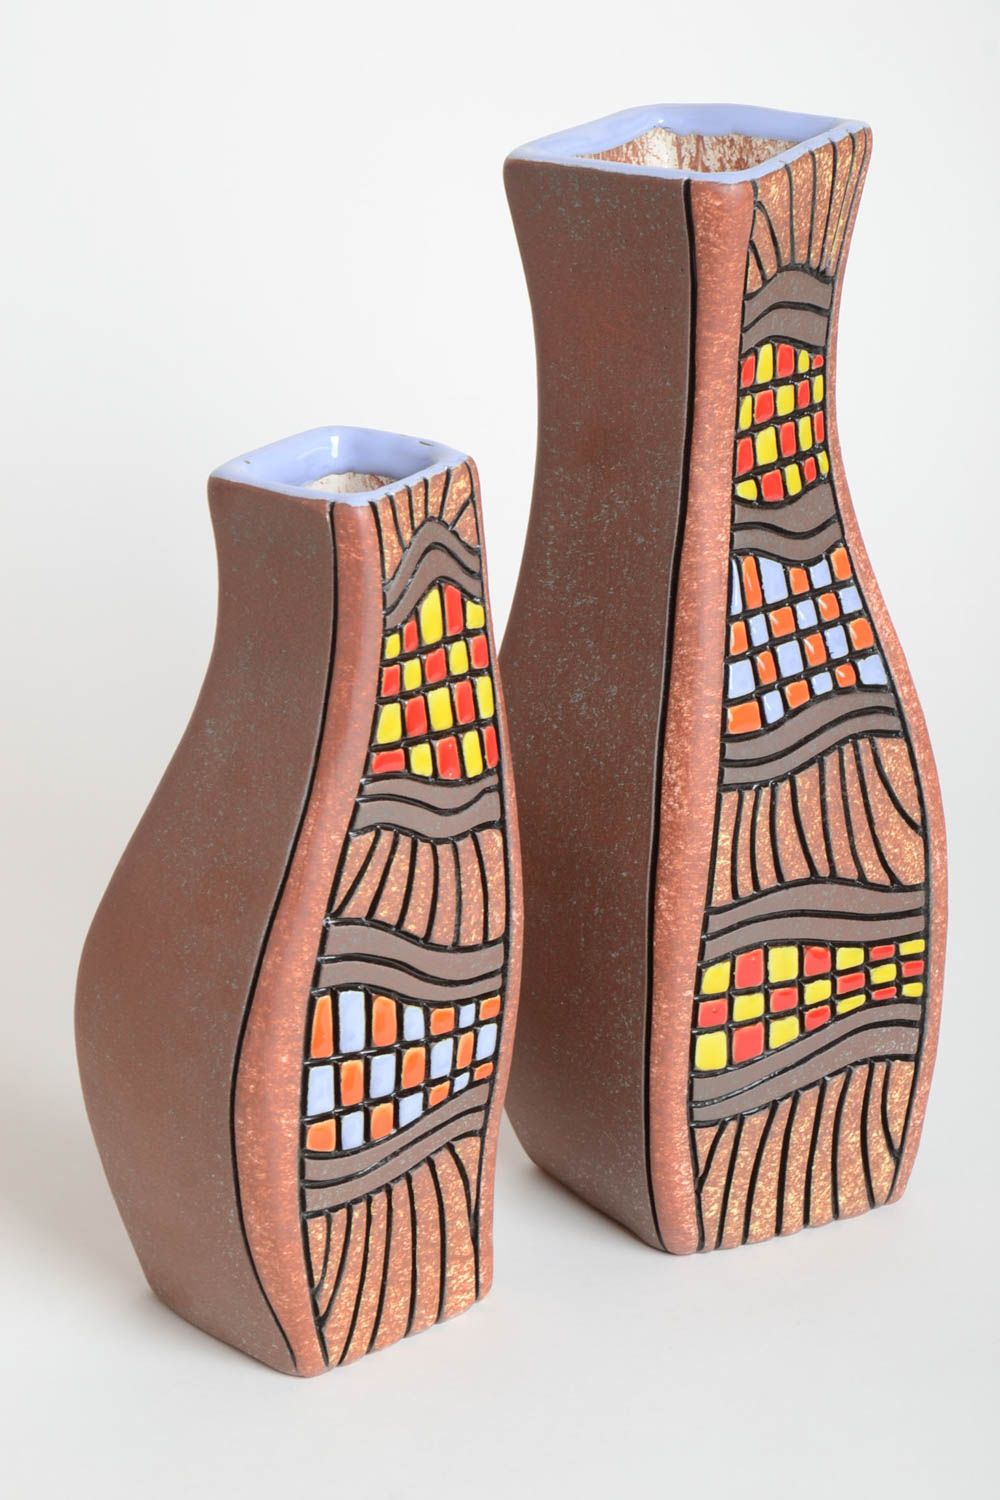 Vase set of handmade ceramic two vases in brown colors 4,6 lb photo 2